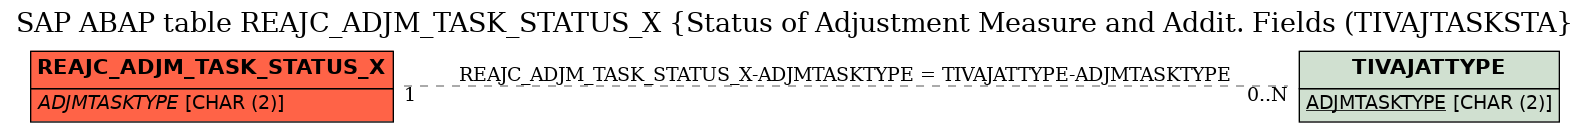 E-R Diagram for table REAJC_ADJM_TASK_STATUS_X (Status of Adjustment Measure and Addit. Fields (TIVAJTASKSTA)